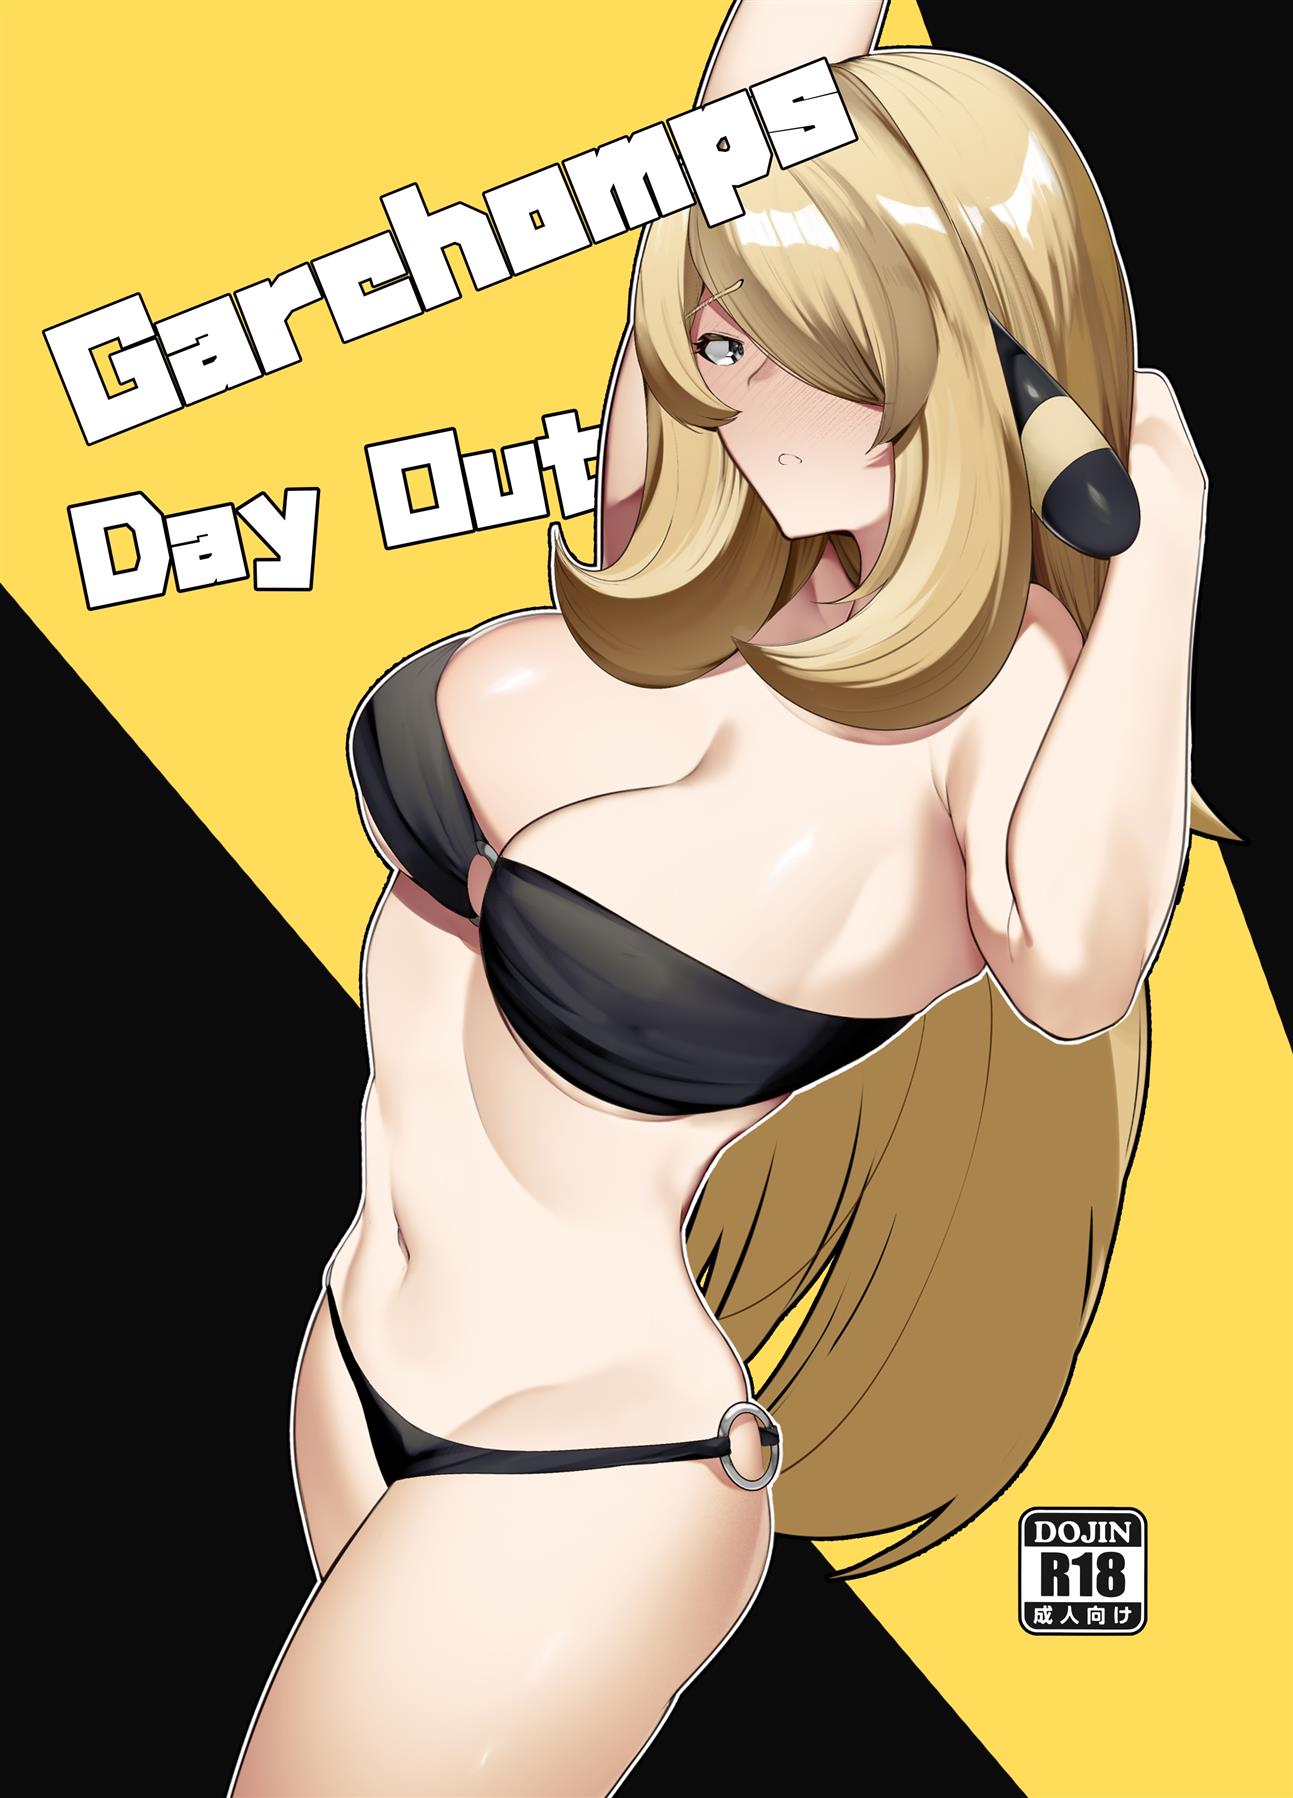 Gaarchamps Day Out (Pokémon)